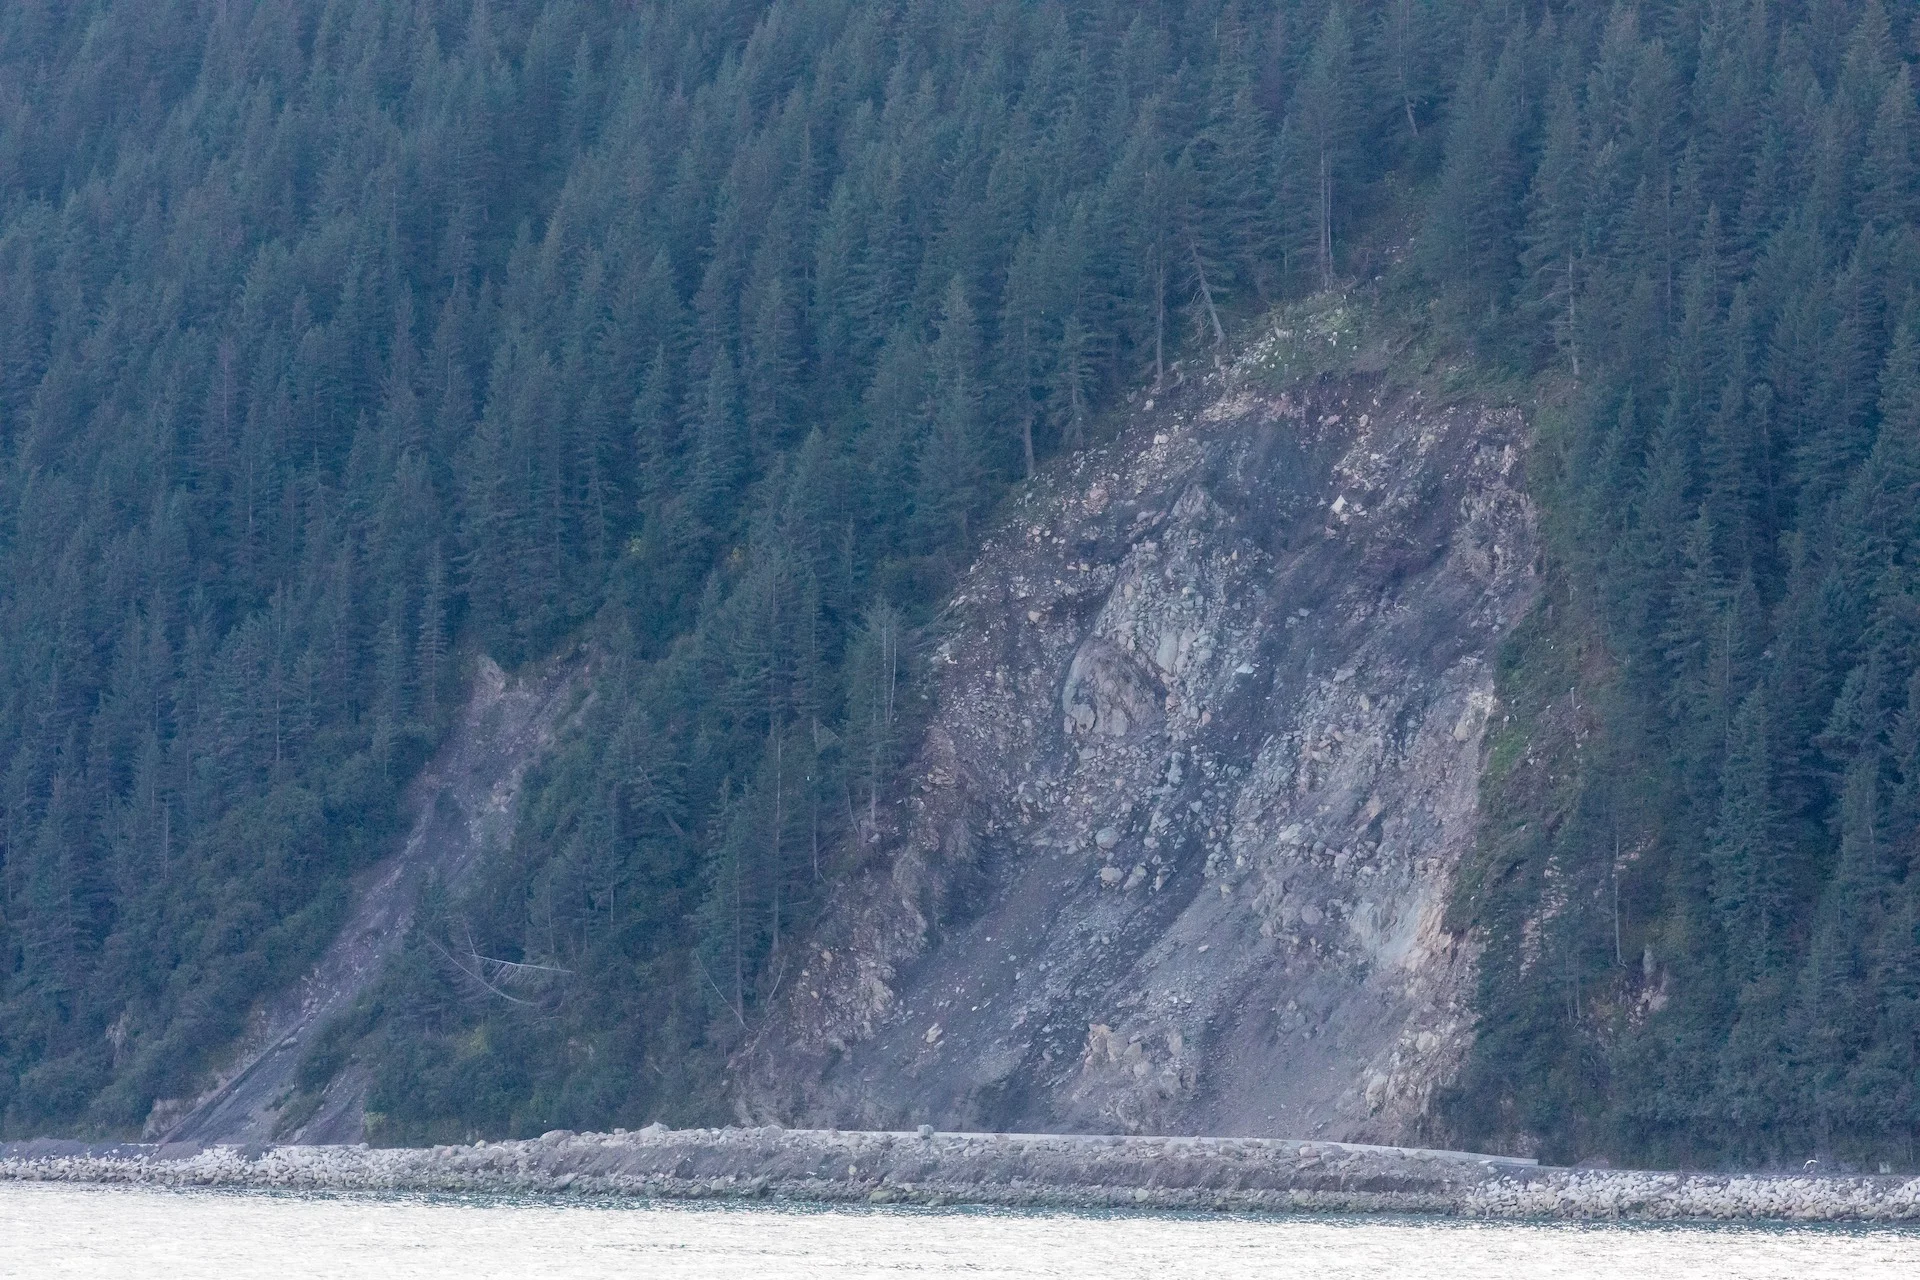 Alaska landslide kills at least 3 people, more believed to be missing